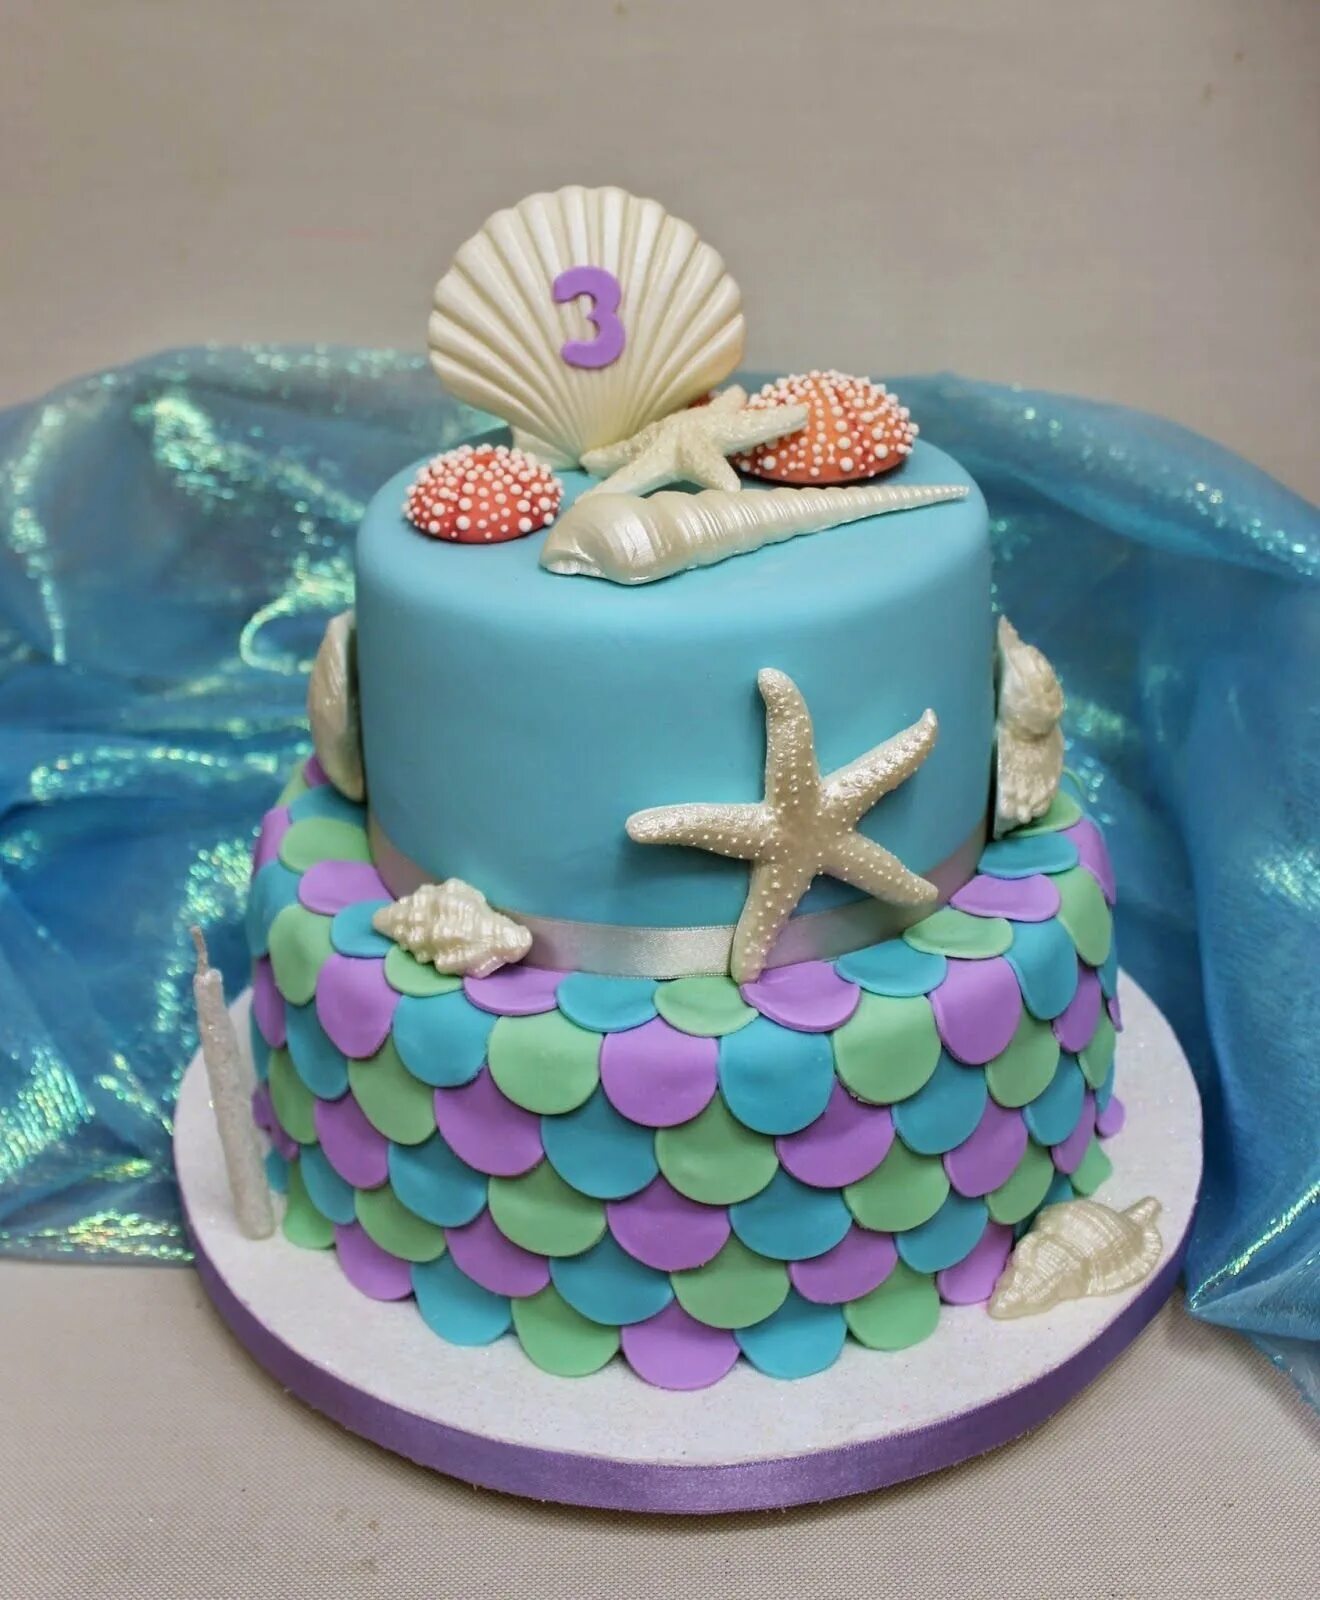 Торт в морском стиле. Морской торт для девочки. Торт с морской тематикой детский. Торт в морском стиле для девочки.